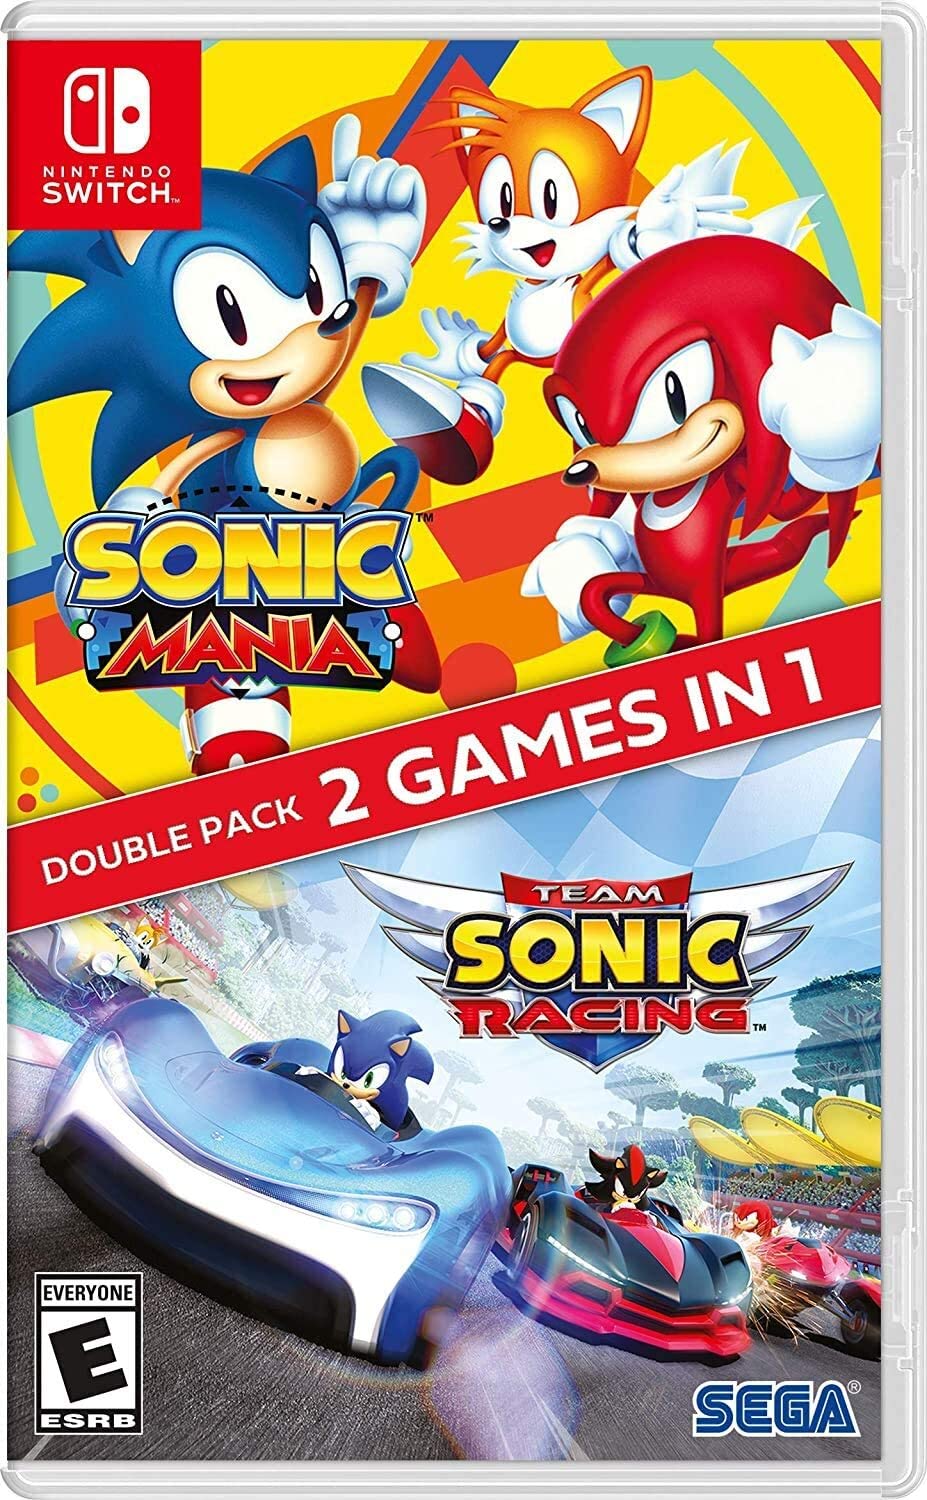 Sonic Mania + Team Sonic Racing Double Pack (Nintendo Switch) $19.99 @ GameStop / Amazon